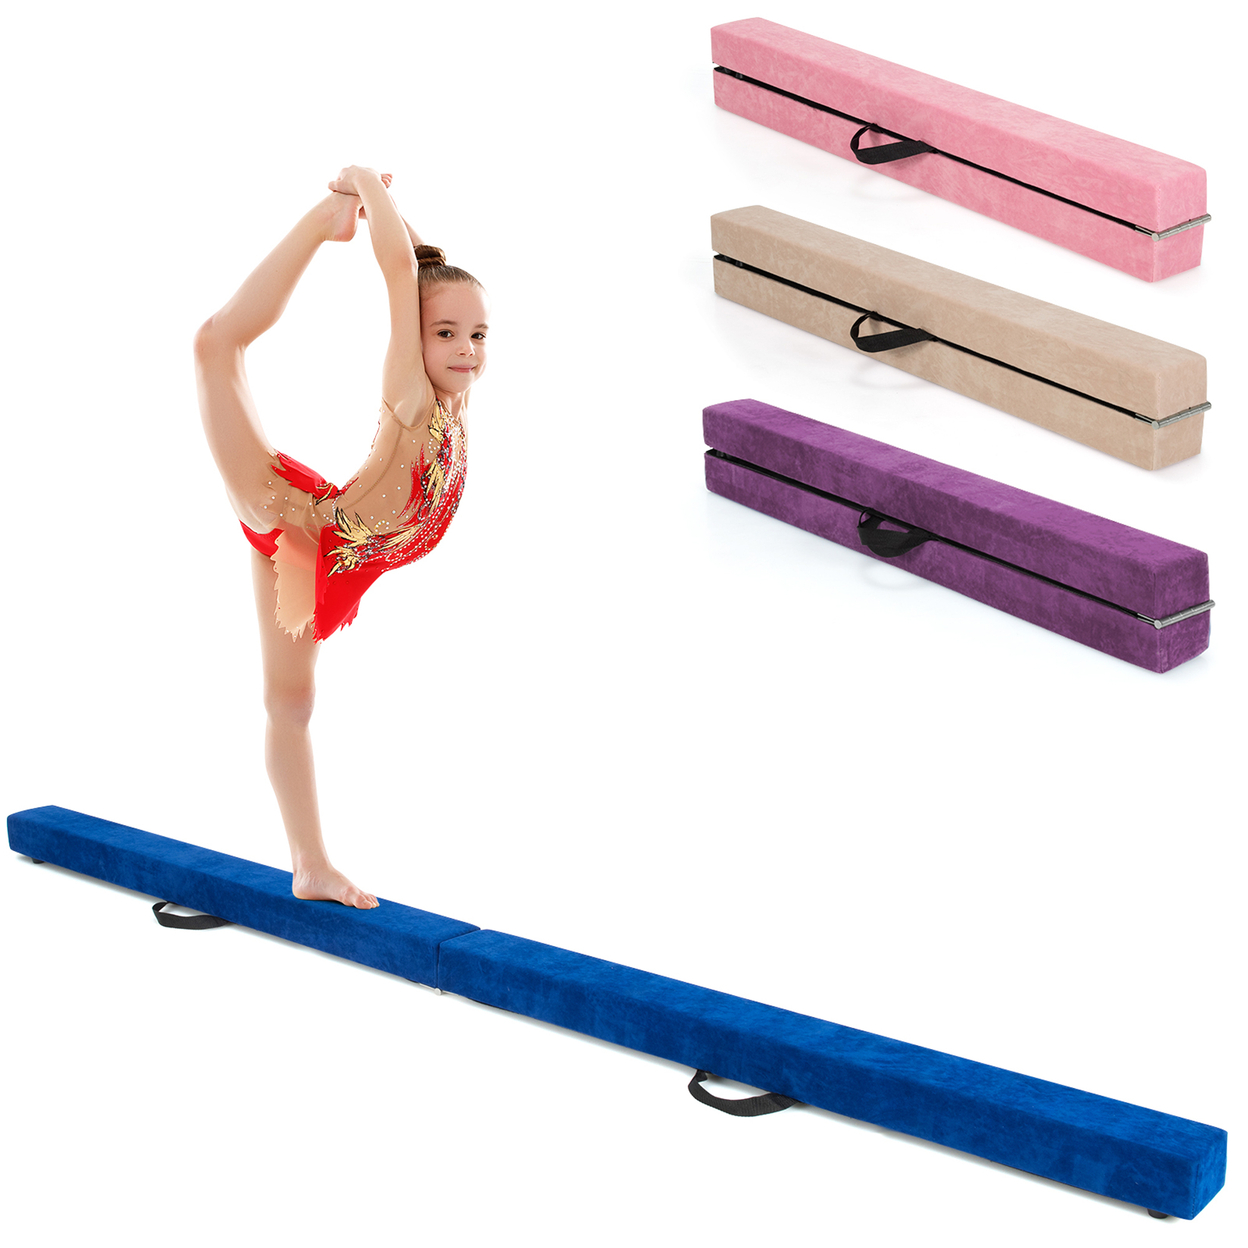 7FT Folding Gymnastic Beam Portable Floor Balance Beam W/Handles For Gymnasts - Blue